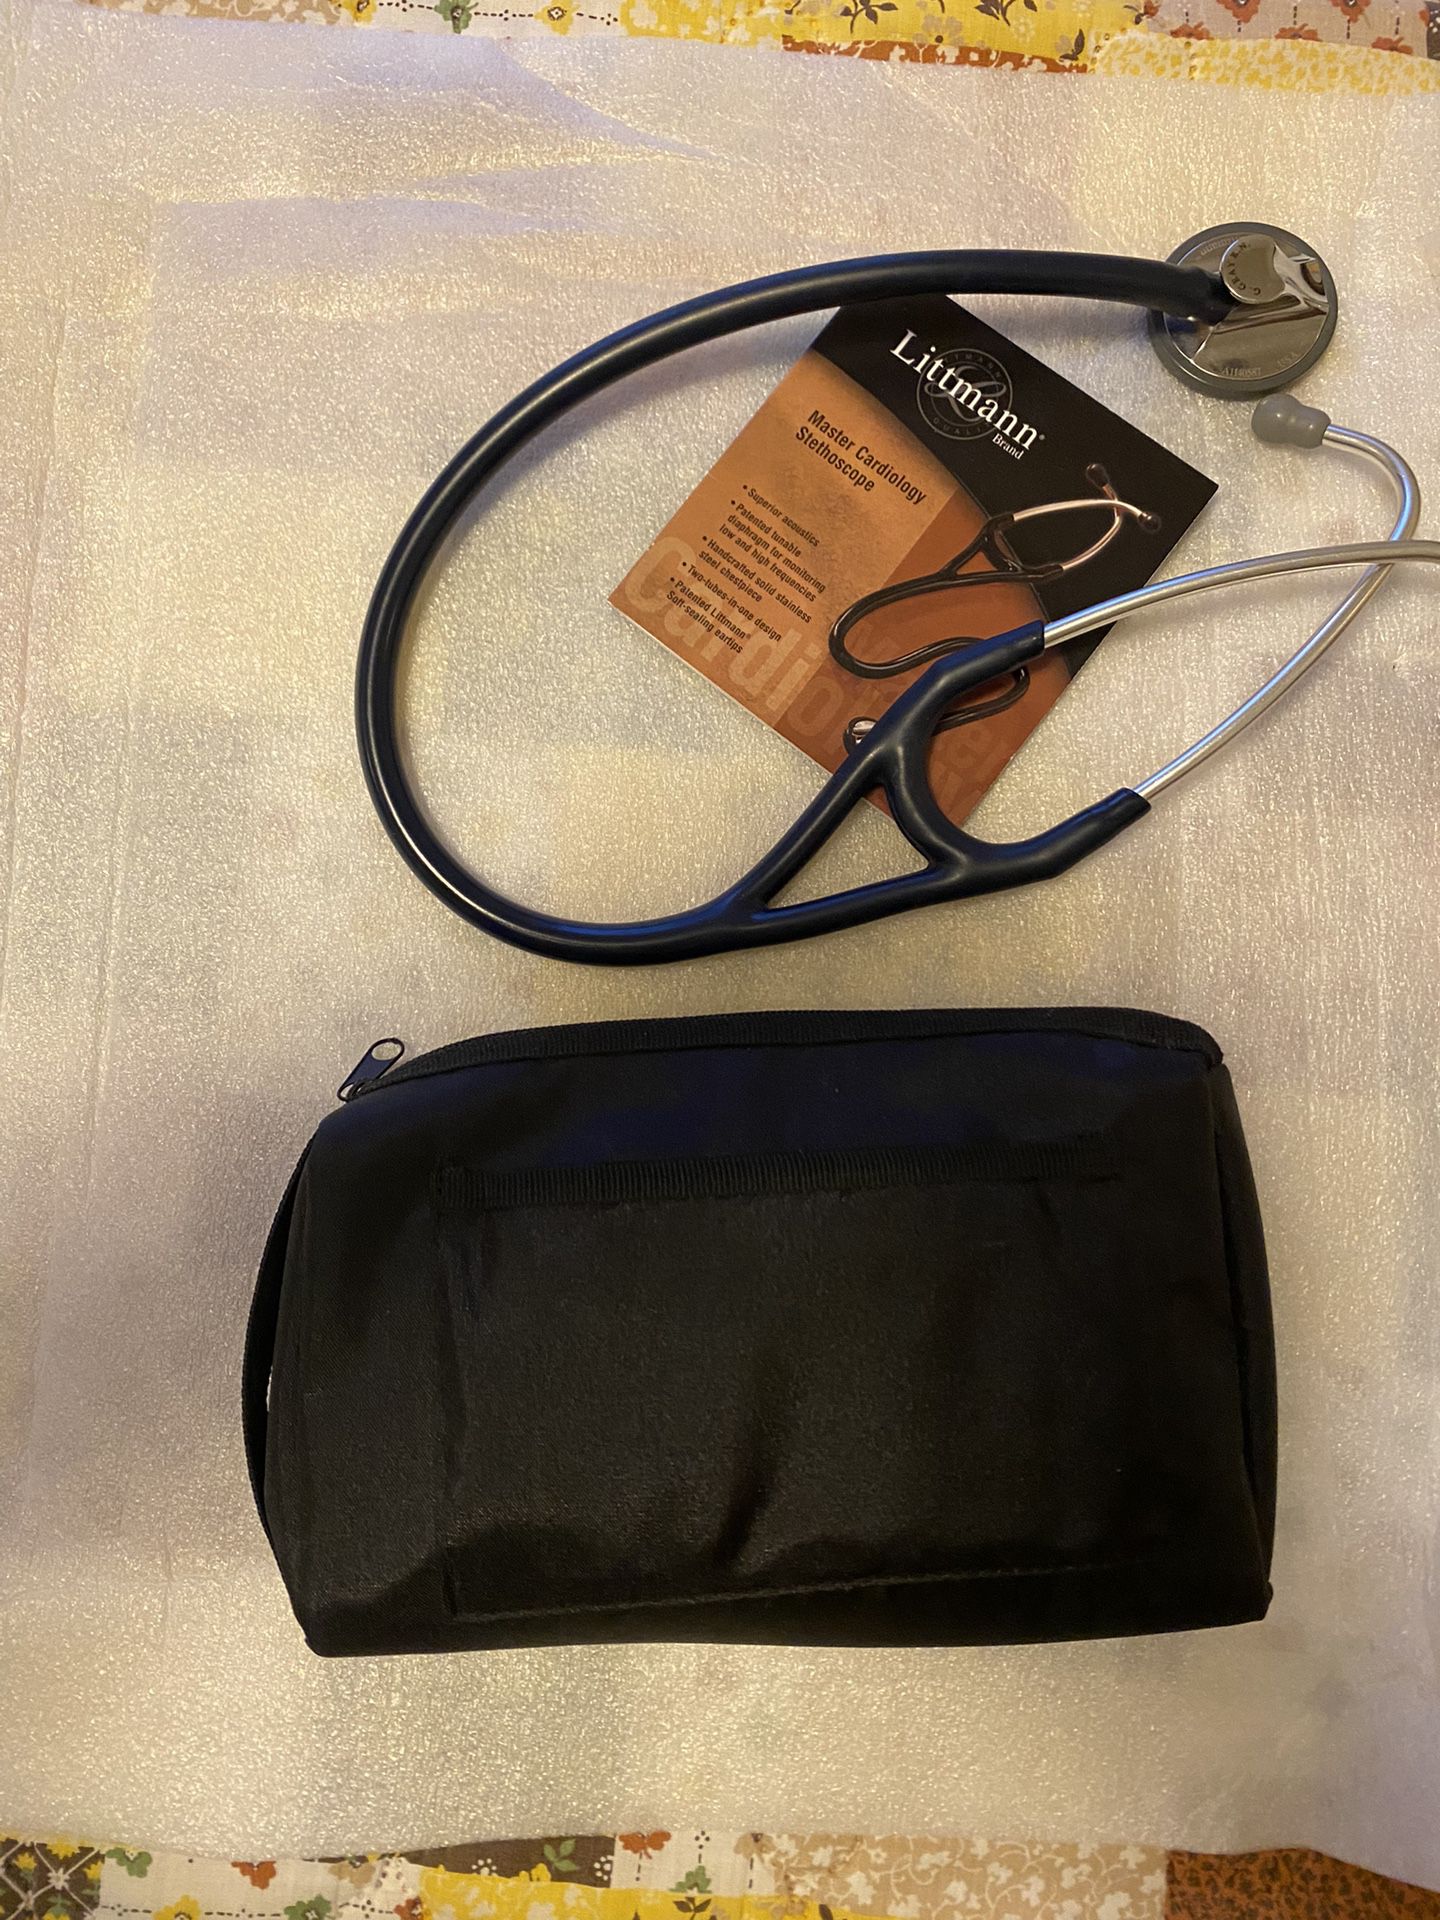 Littman Master Cardiology Stethoscope And Blood Pressure Cuff 